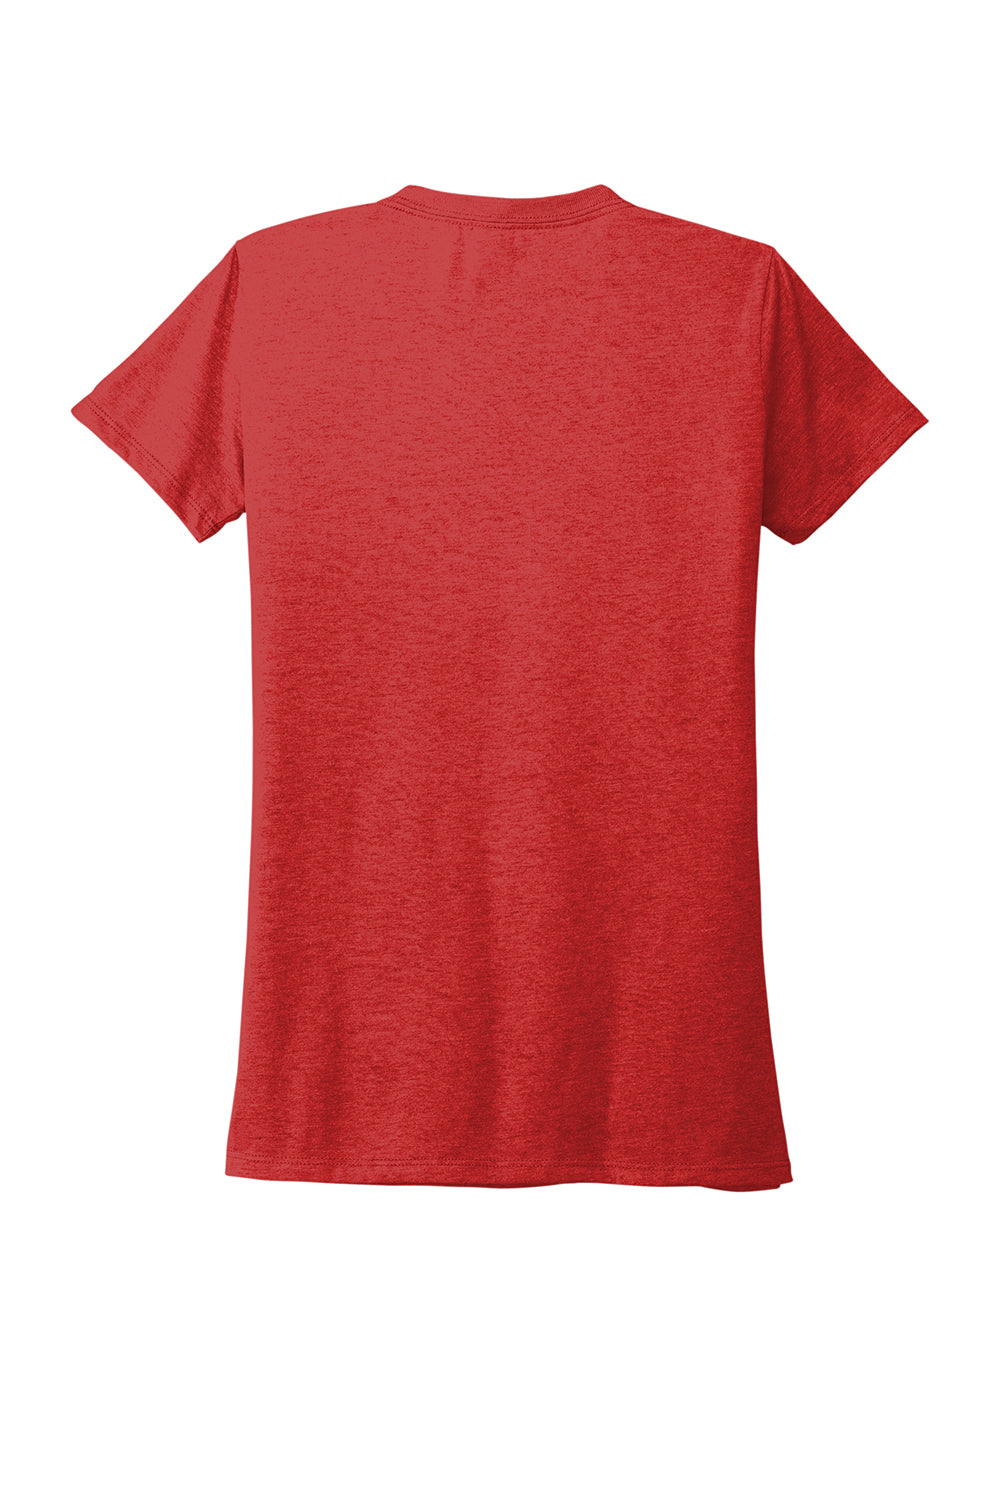 Allmade AL2008 Womens Short Sleeve Crewneck T-Shirt Rise Up Red Flat Back